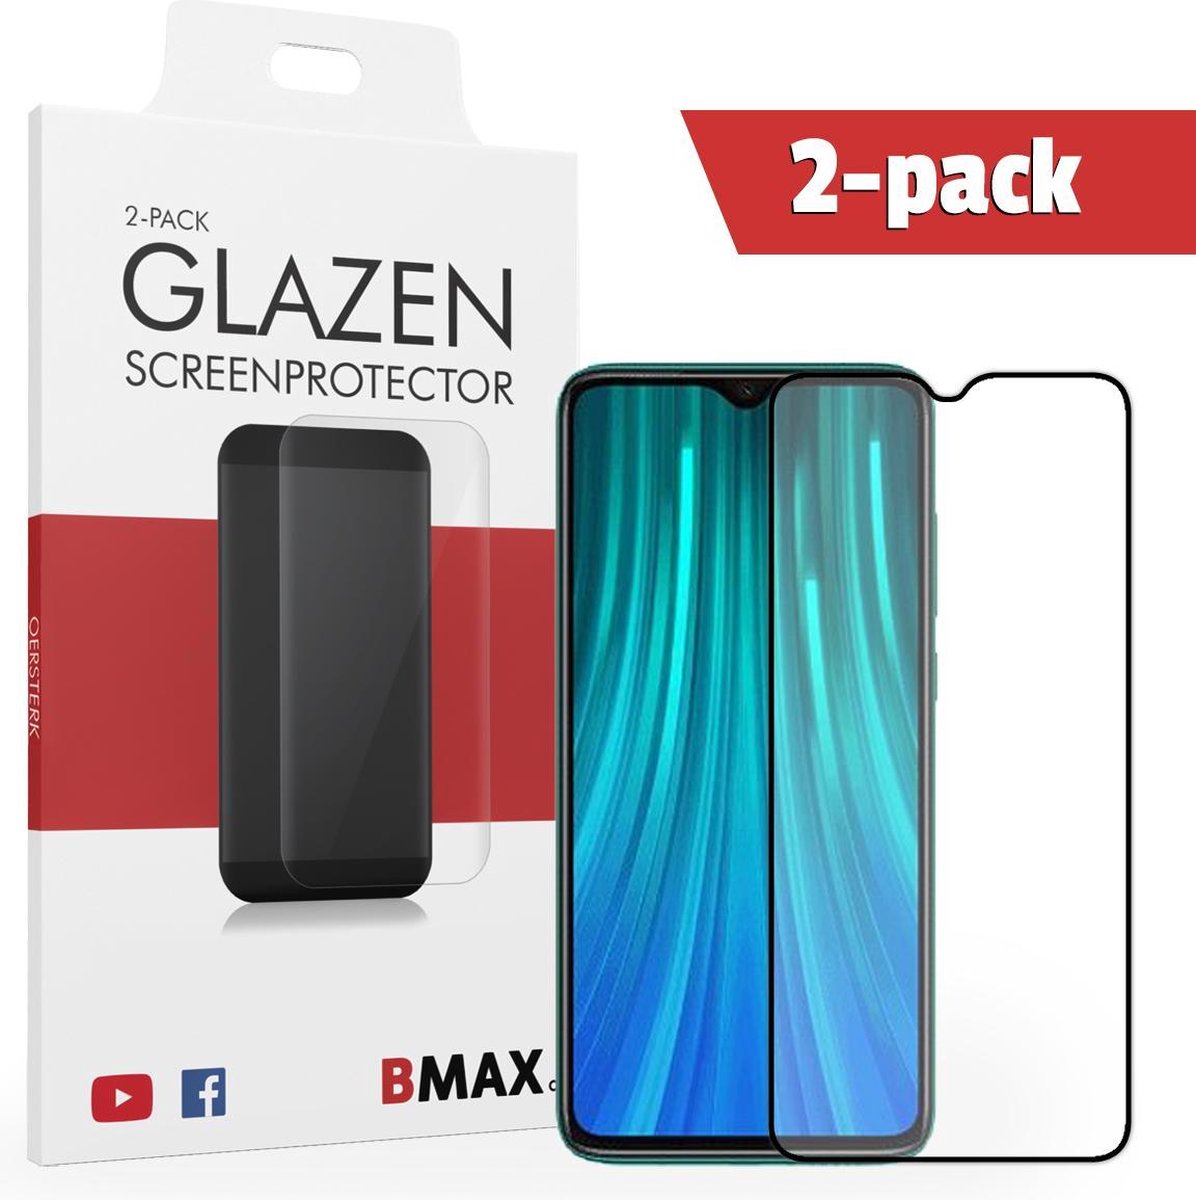 2-pack Bmax Xiaomi Redmi Note 8 Pro Screenprotector - Glass - Full Cover 2.5d - Black